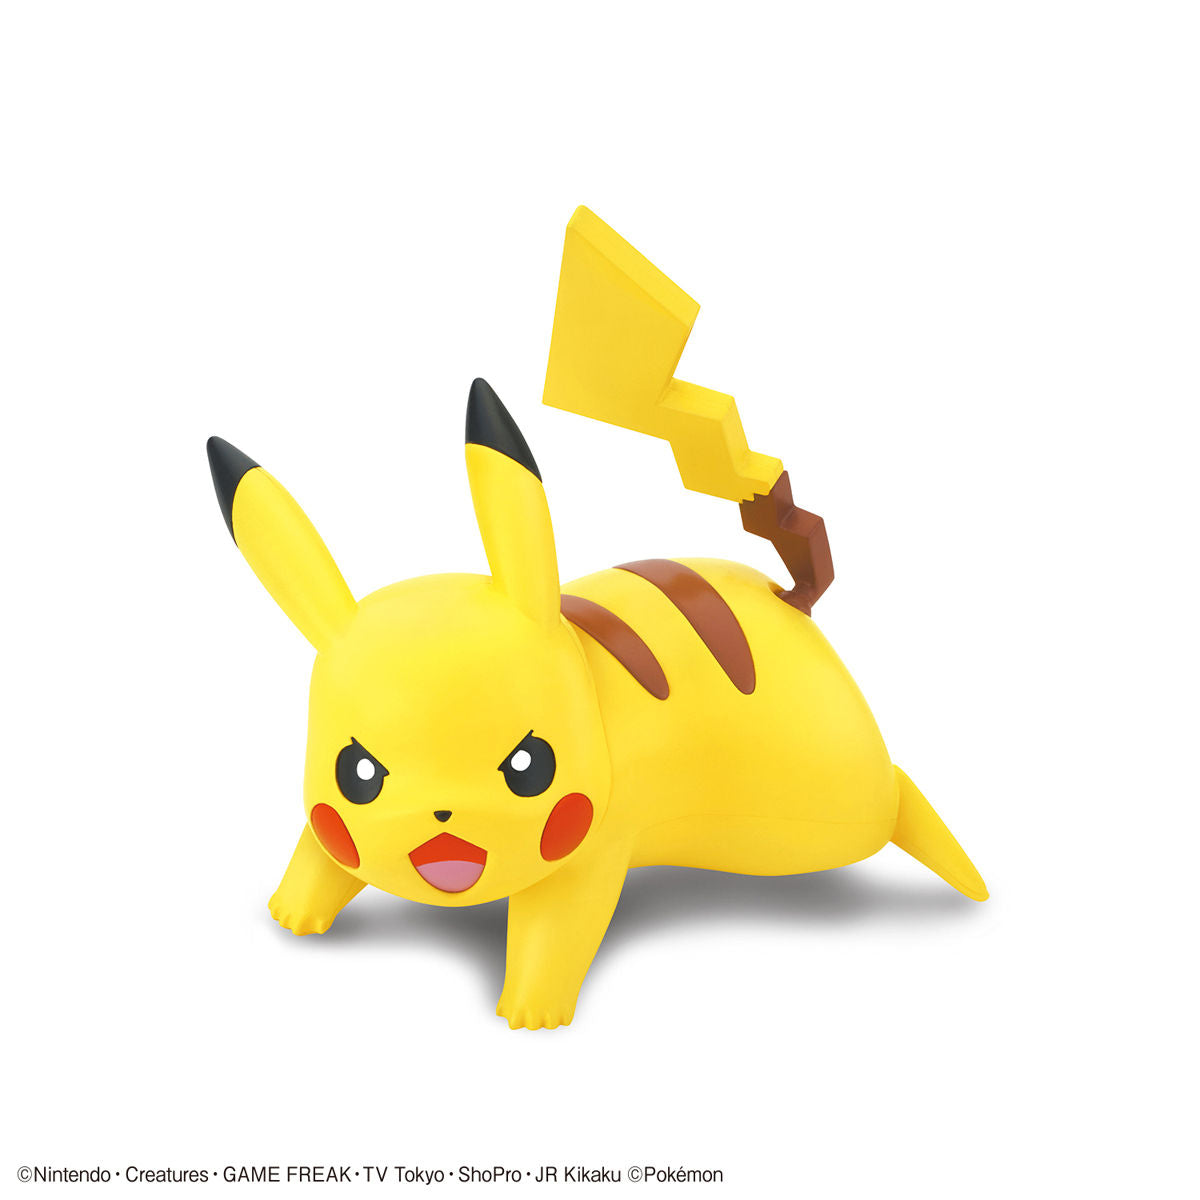 Pokemon - Plastic Model Collection Quick!! : 03 Pikachu (Battle Pose)